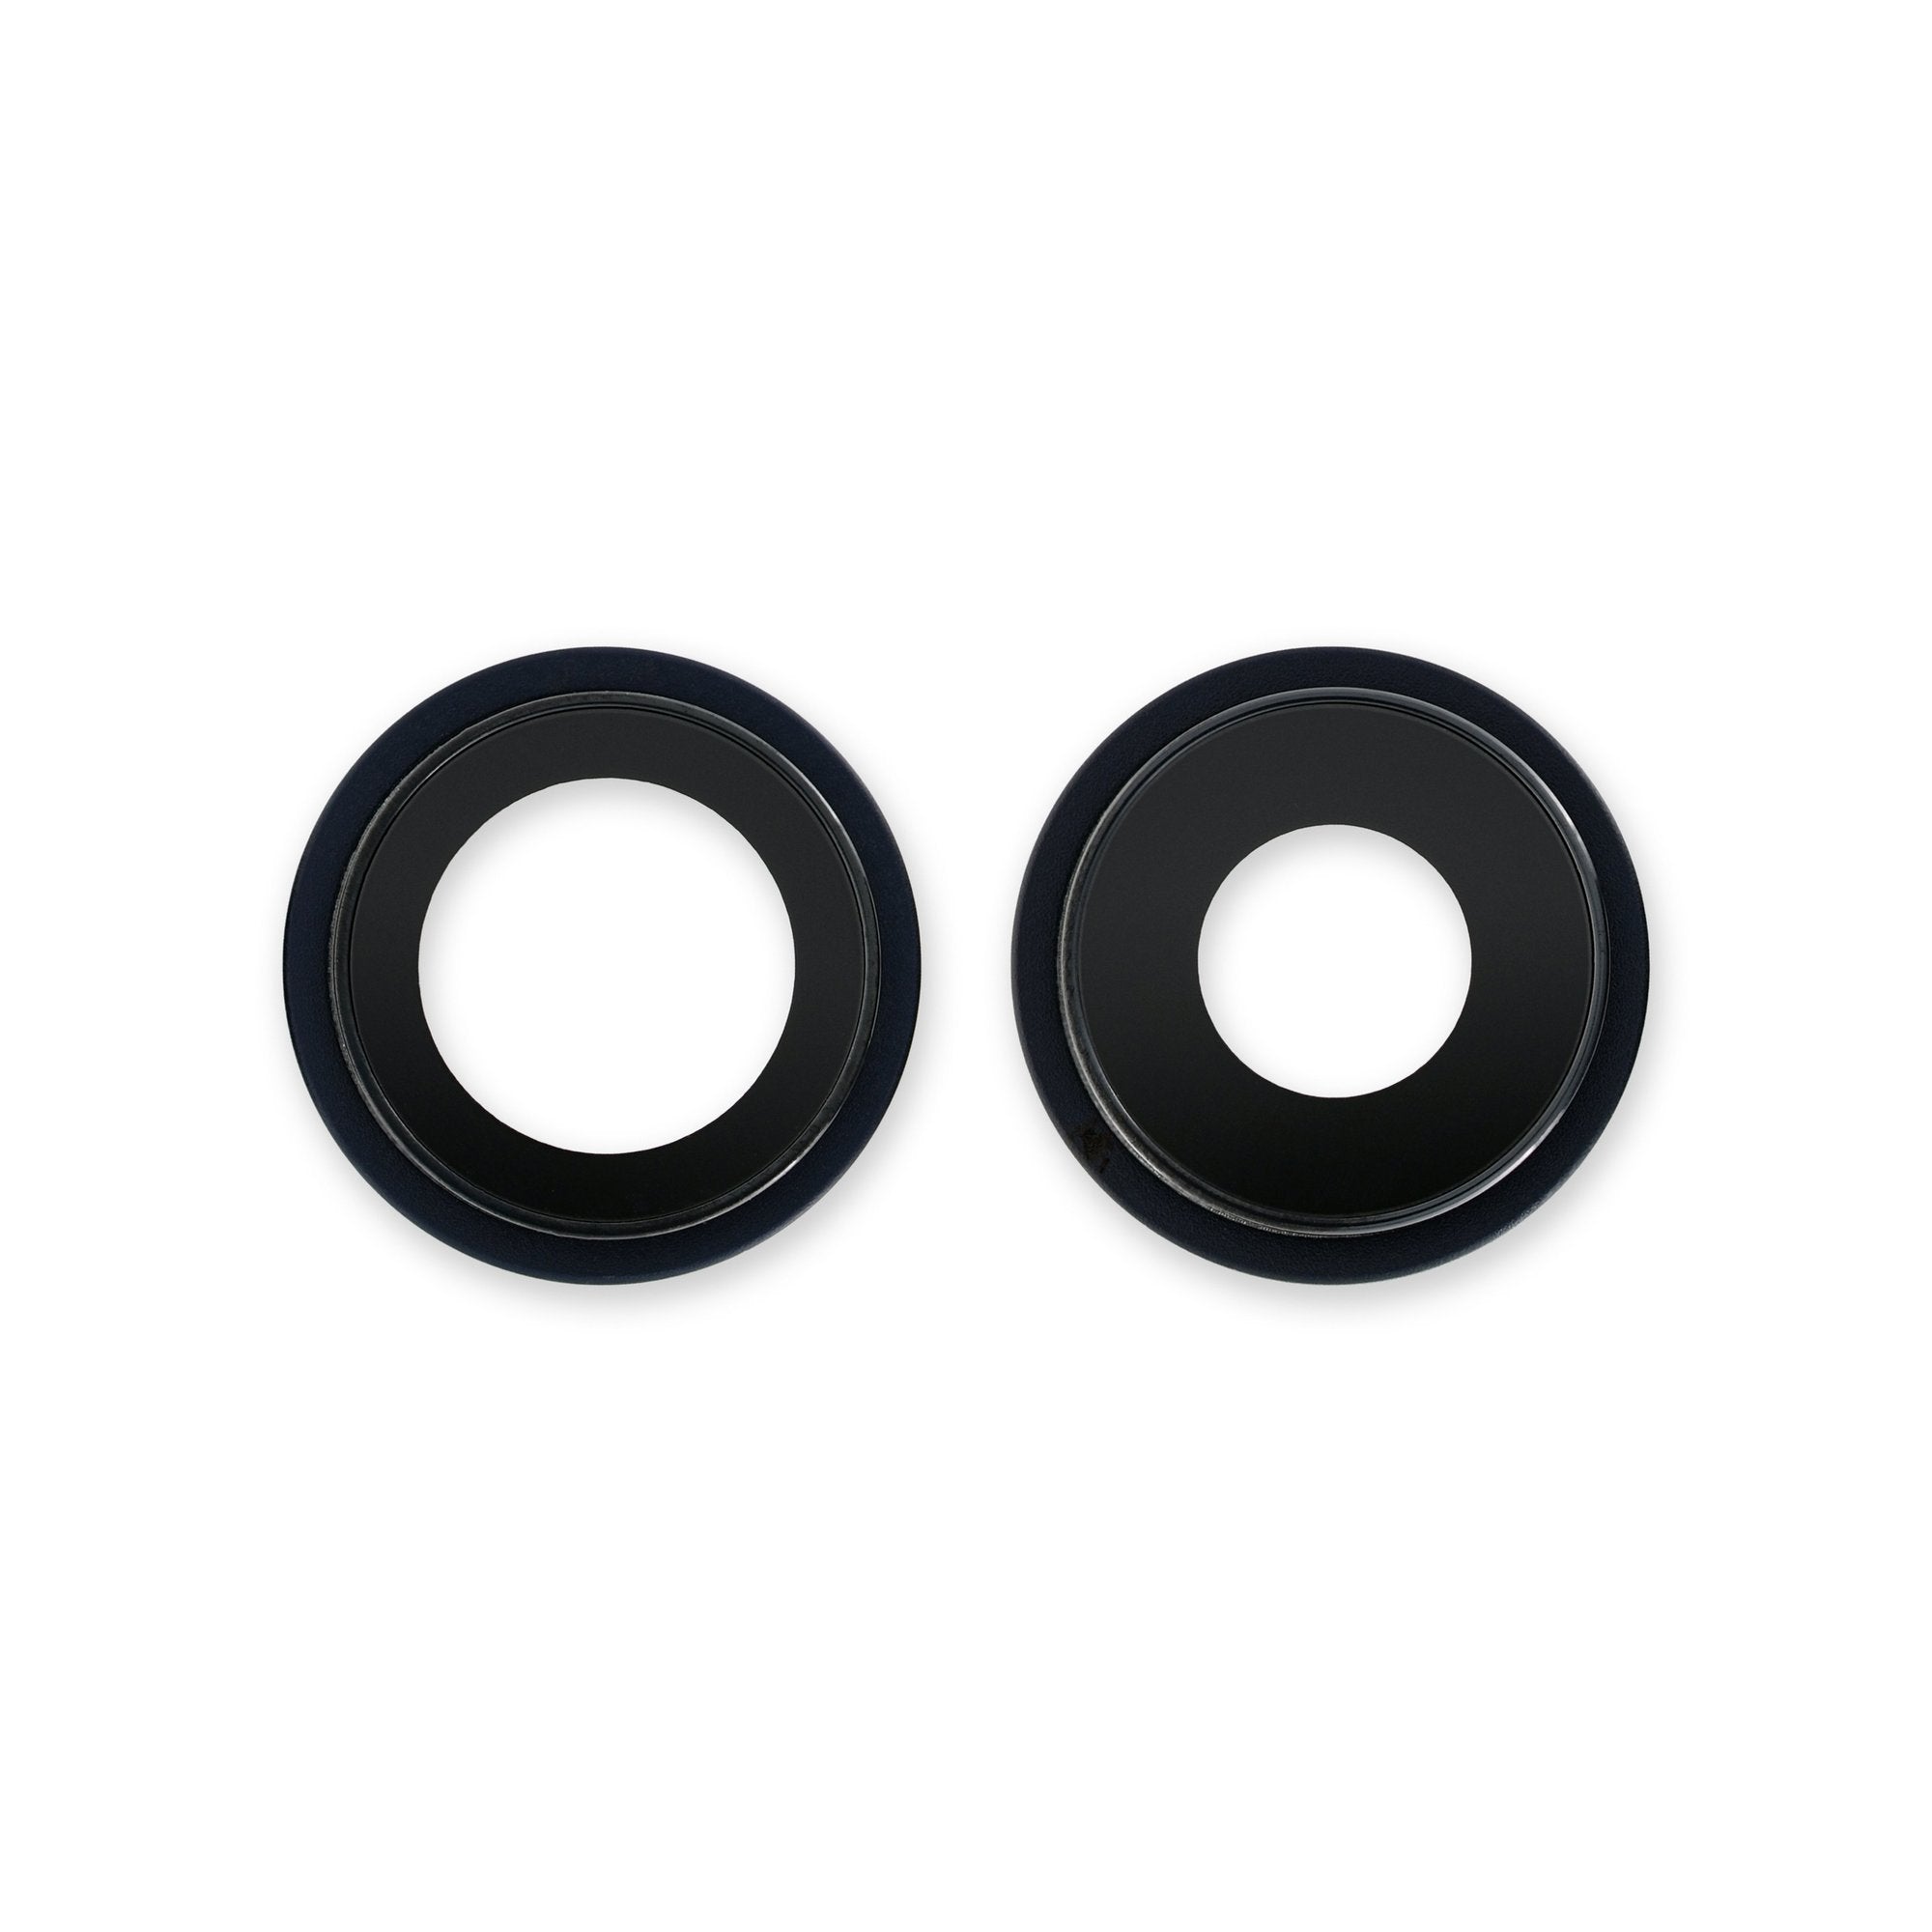 iPhone 12 mini Rear Camera Lenses and Bezels Black New